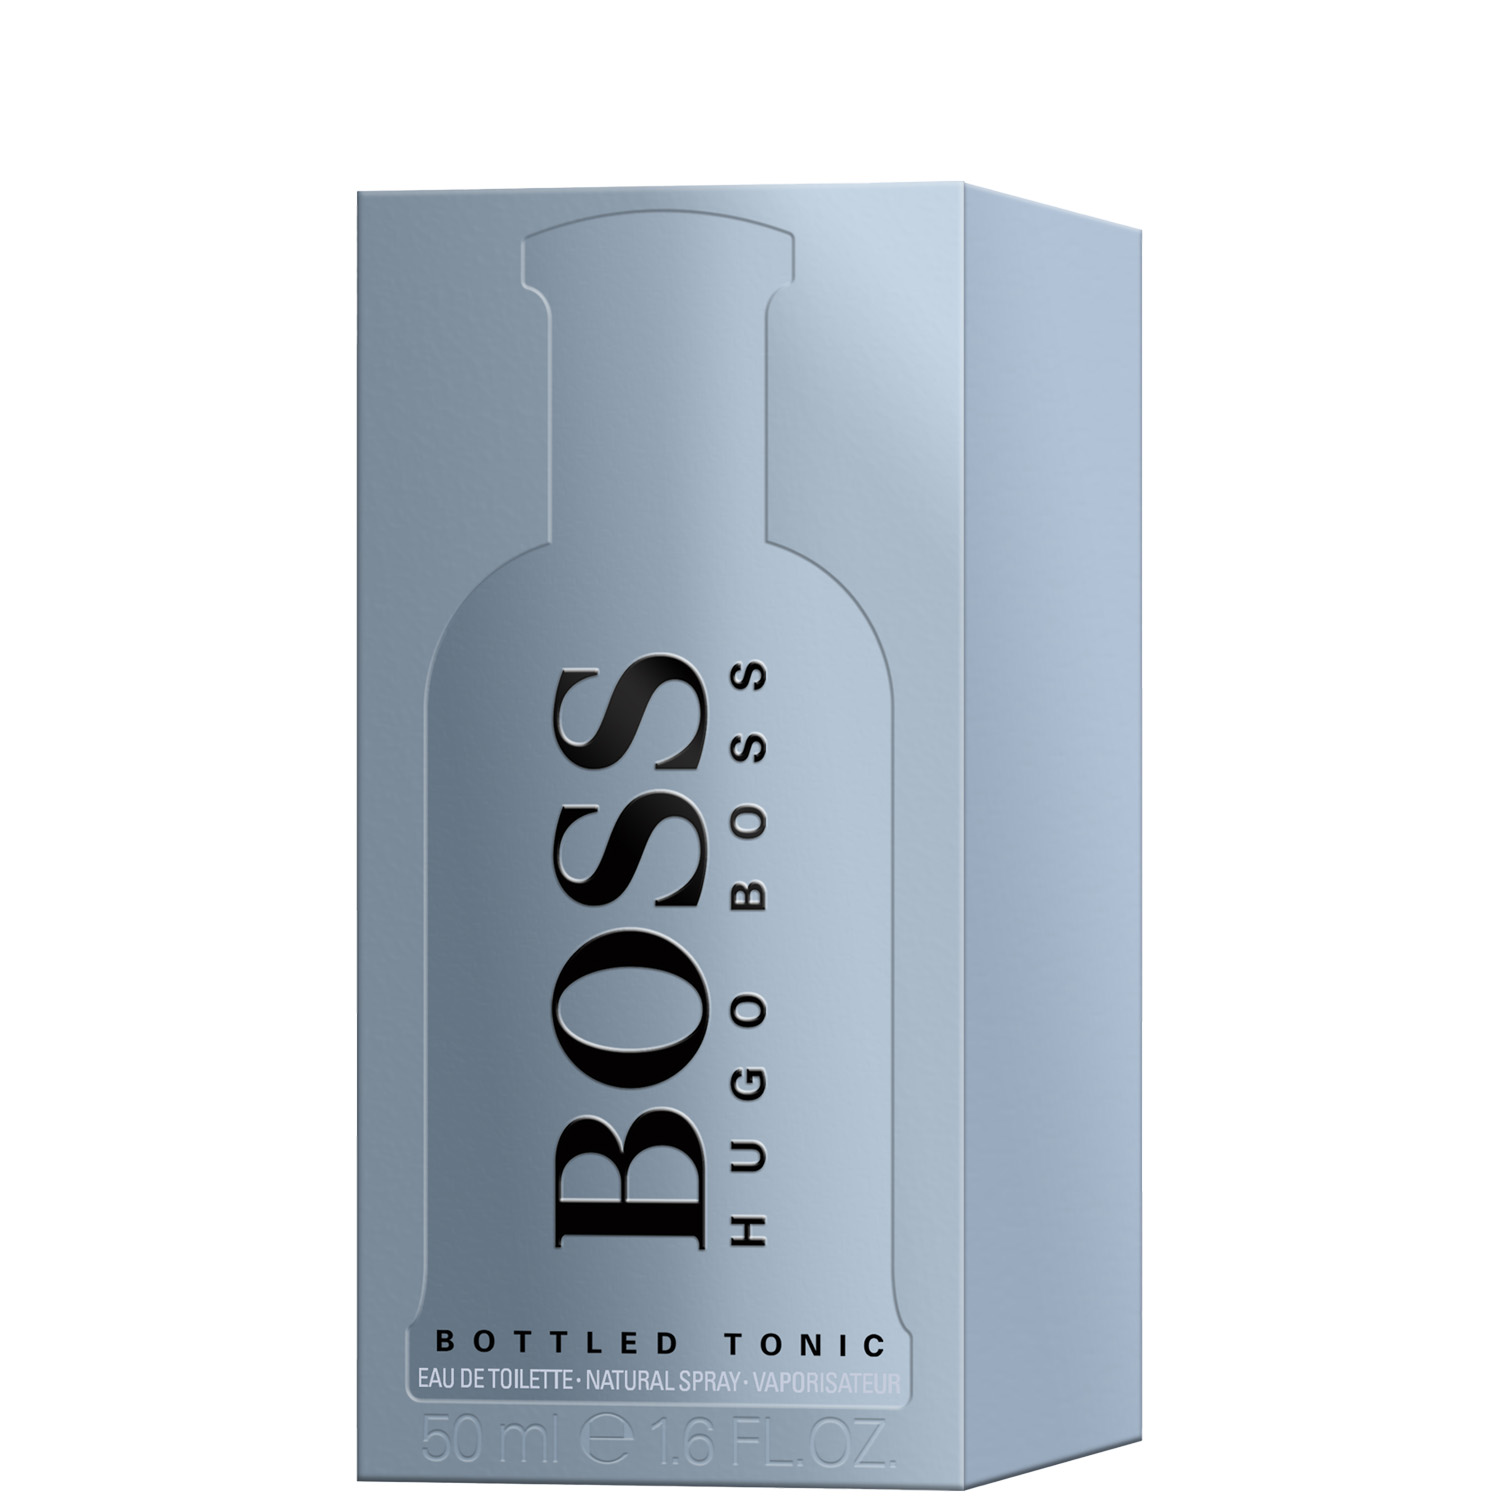 Hugo Boss Bottled Tonic Eau de Toilette 50ml